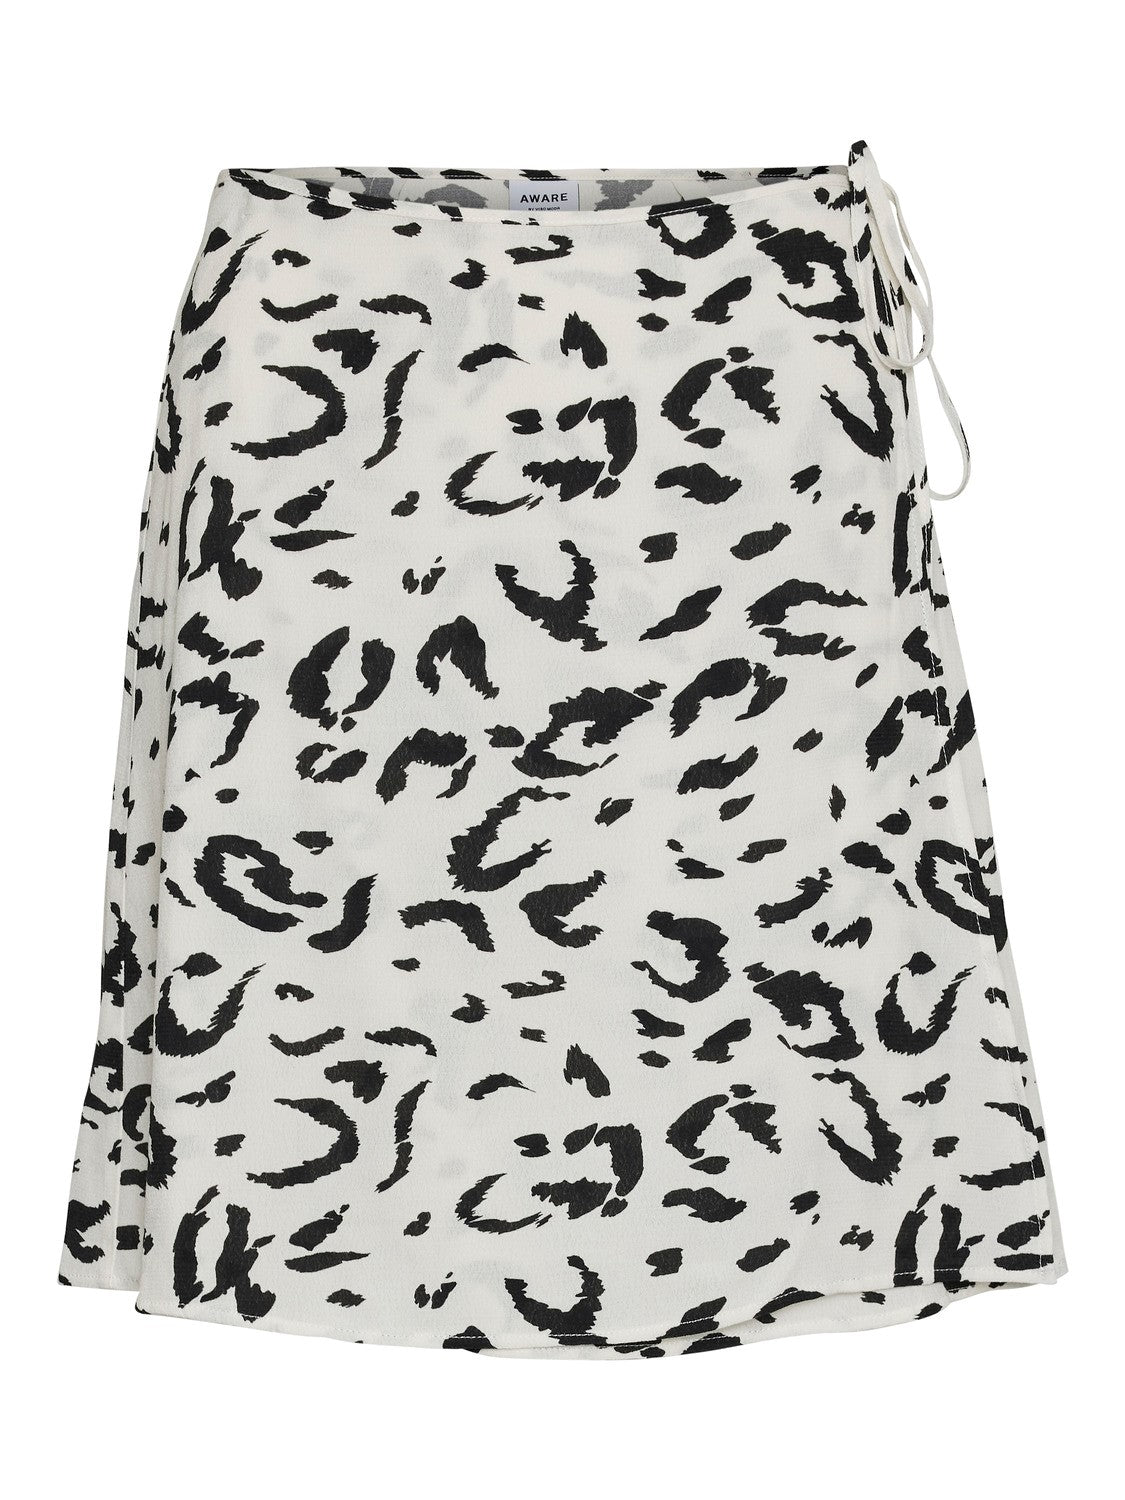 
                  
                    VERO MODA Fergie Leopard Print Mini Wrap Skirt in White & Black - One Nation Clothing
                  
                